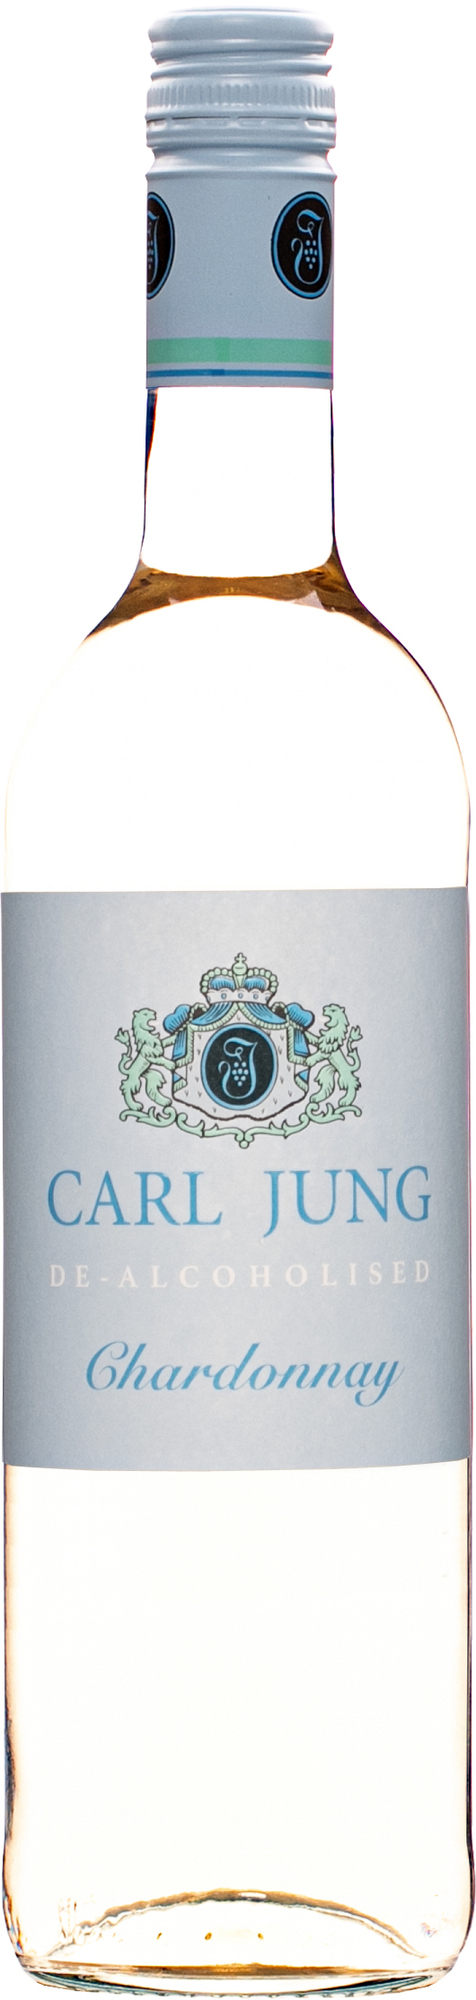 Carl Jung Chardonnay - Non-alcoholic | Bondston wine